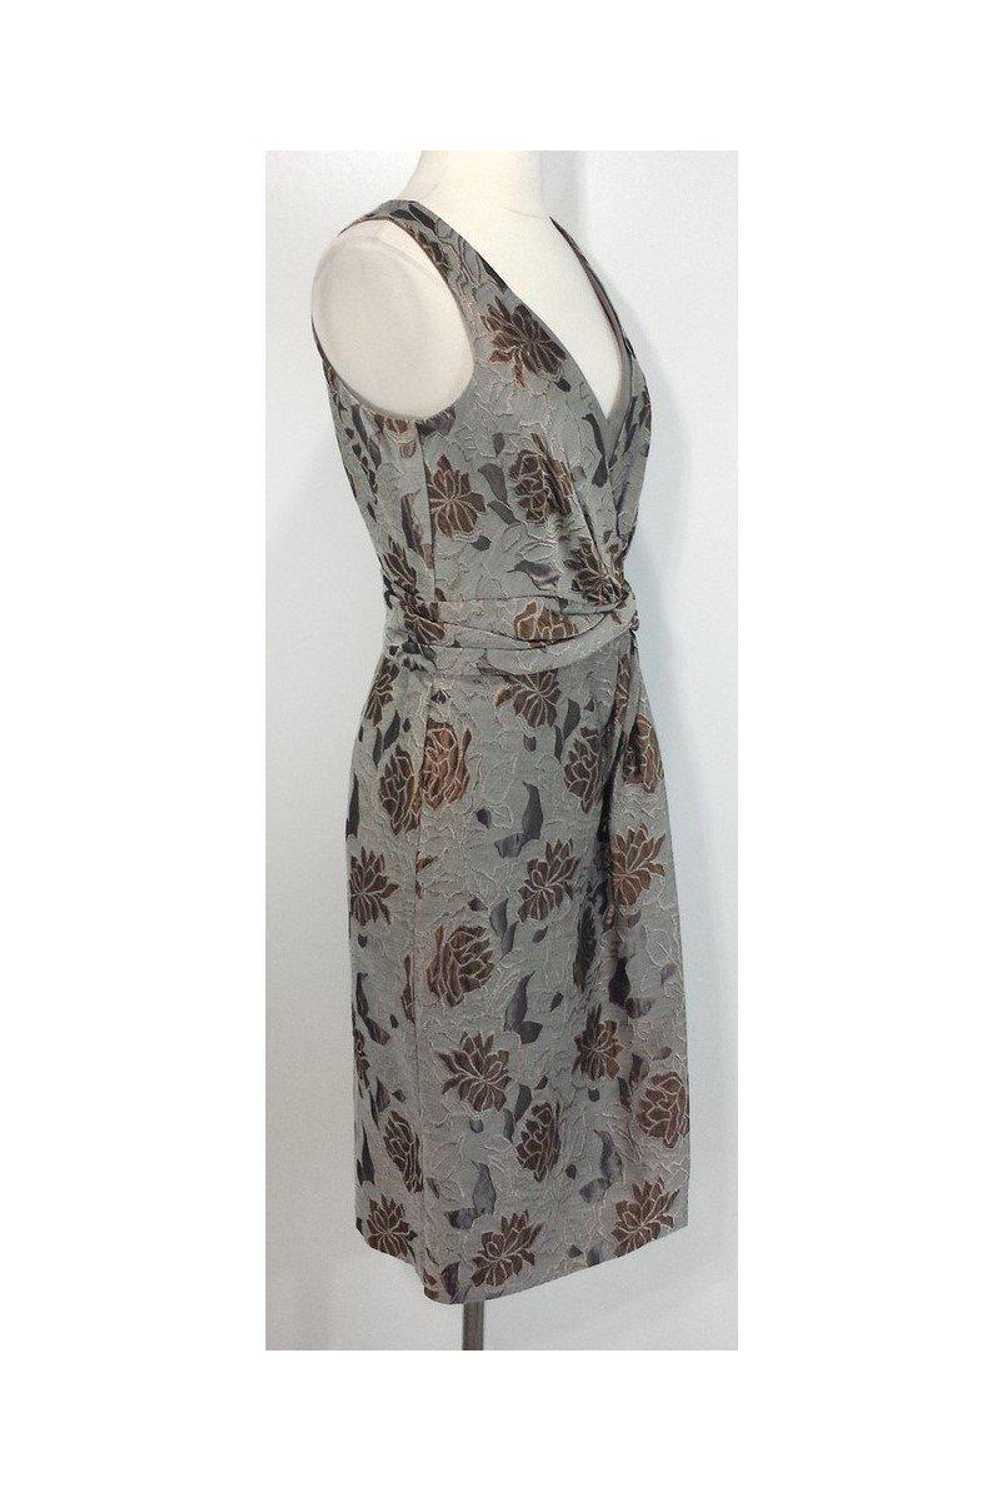 Armani Collezioni - Floral Print V neck Dress Sz 6 - image 2